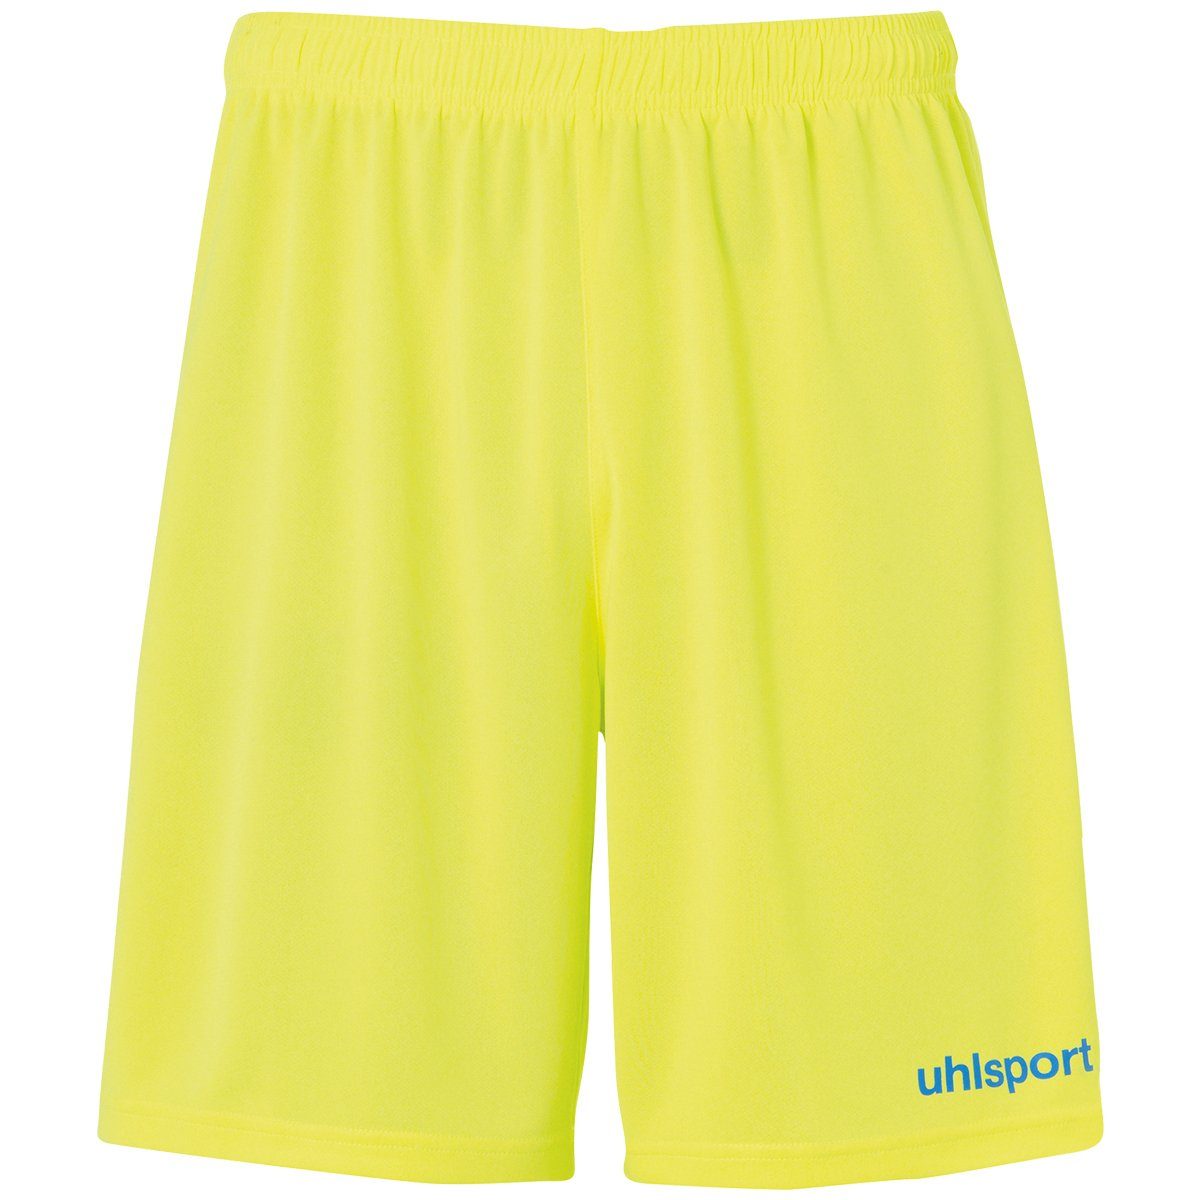 fluo blau uhlsport uhlsport Shorts Shorts gelb/radar